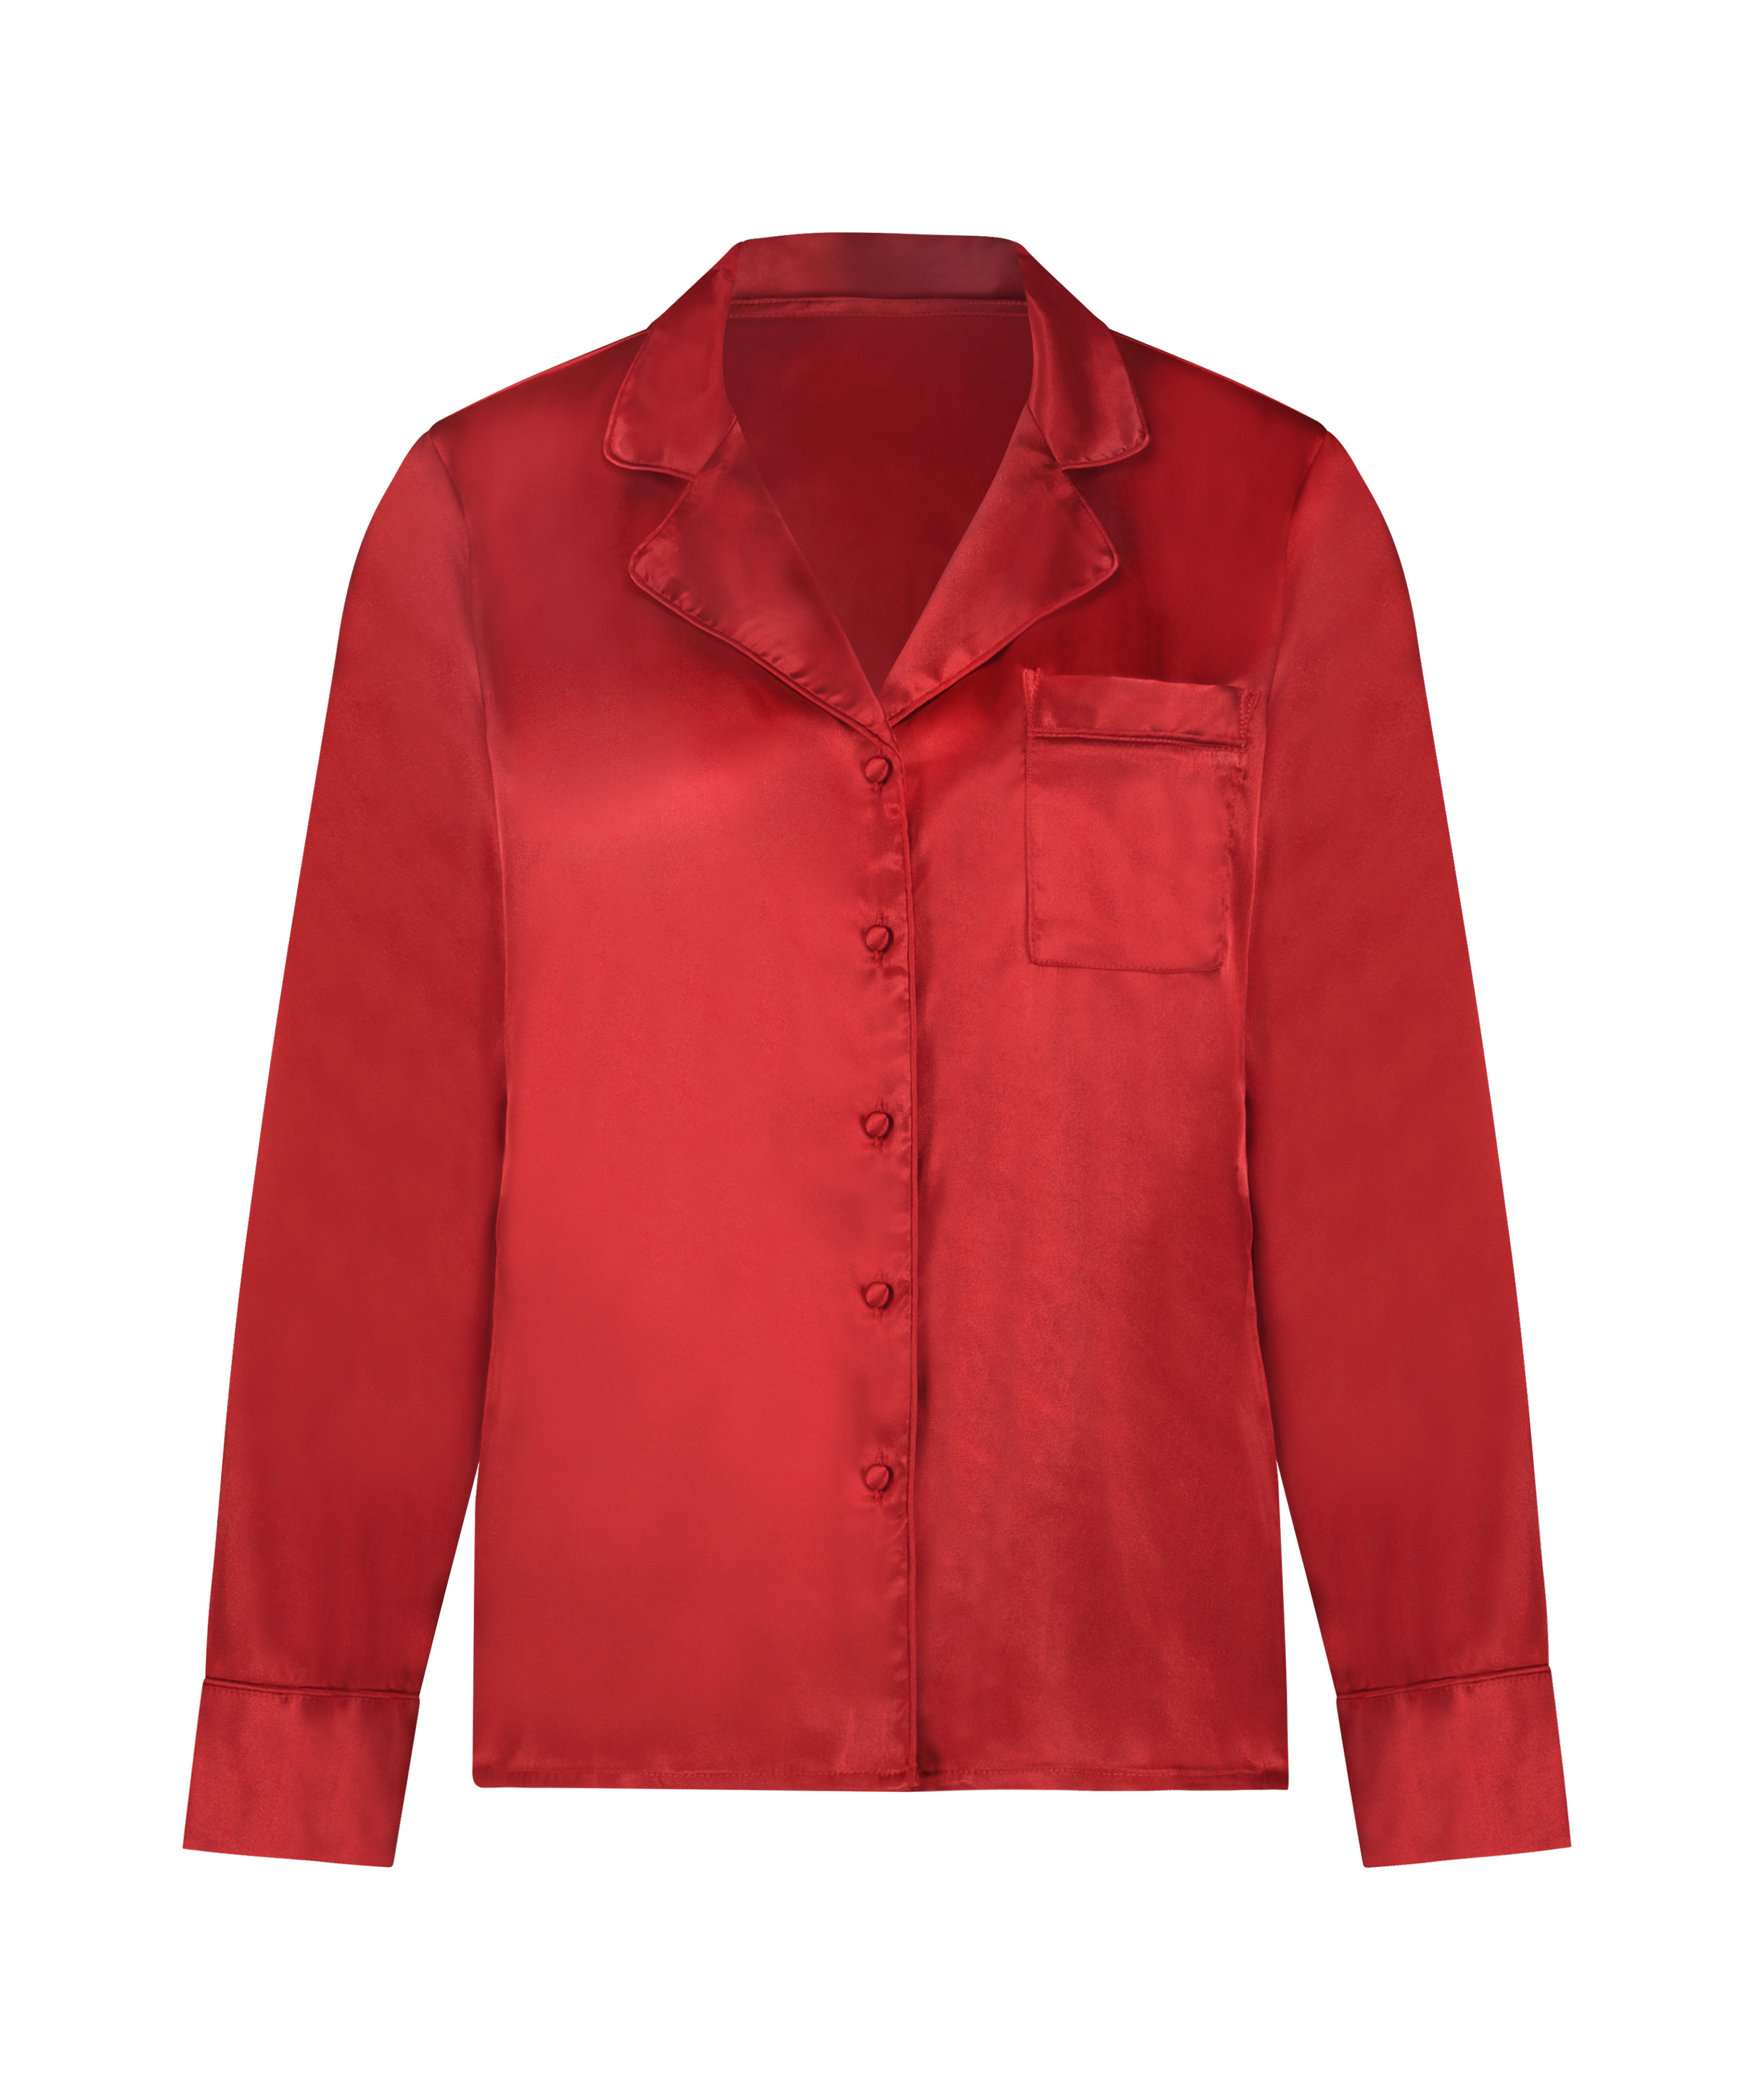 Satin Long-Sleeved Jacket, Red, main